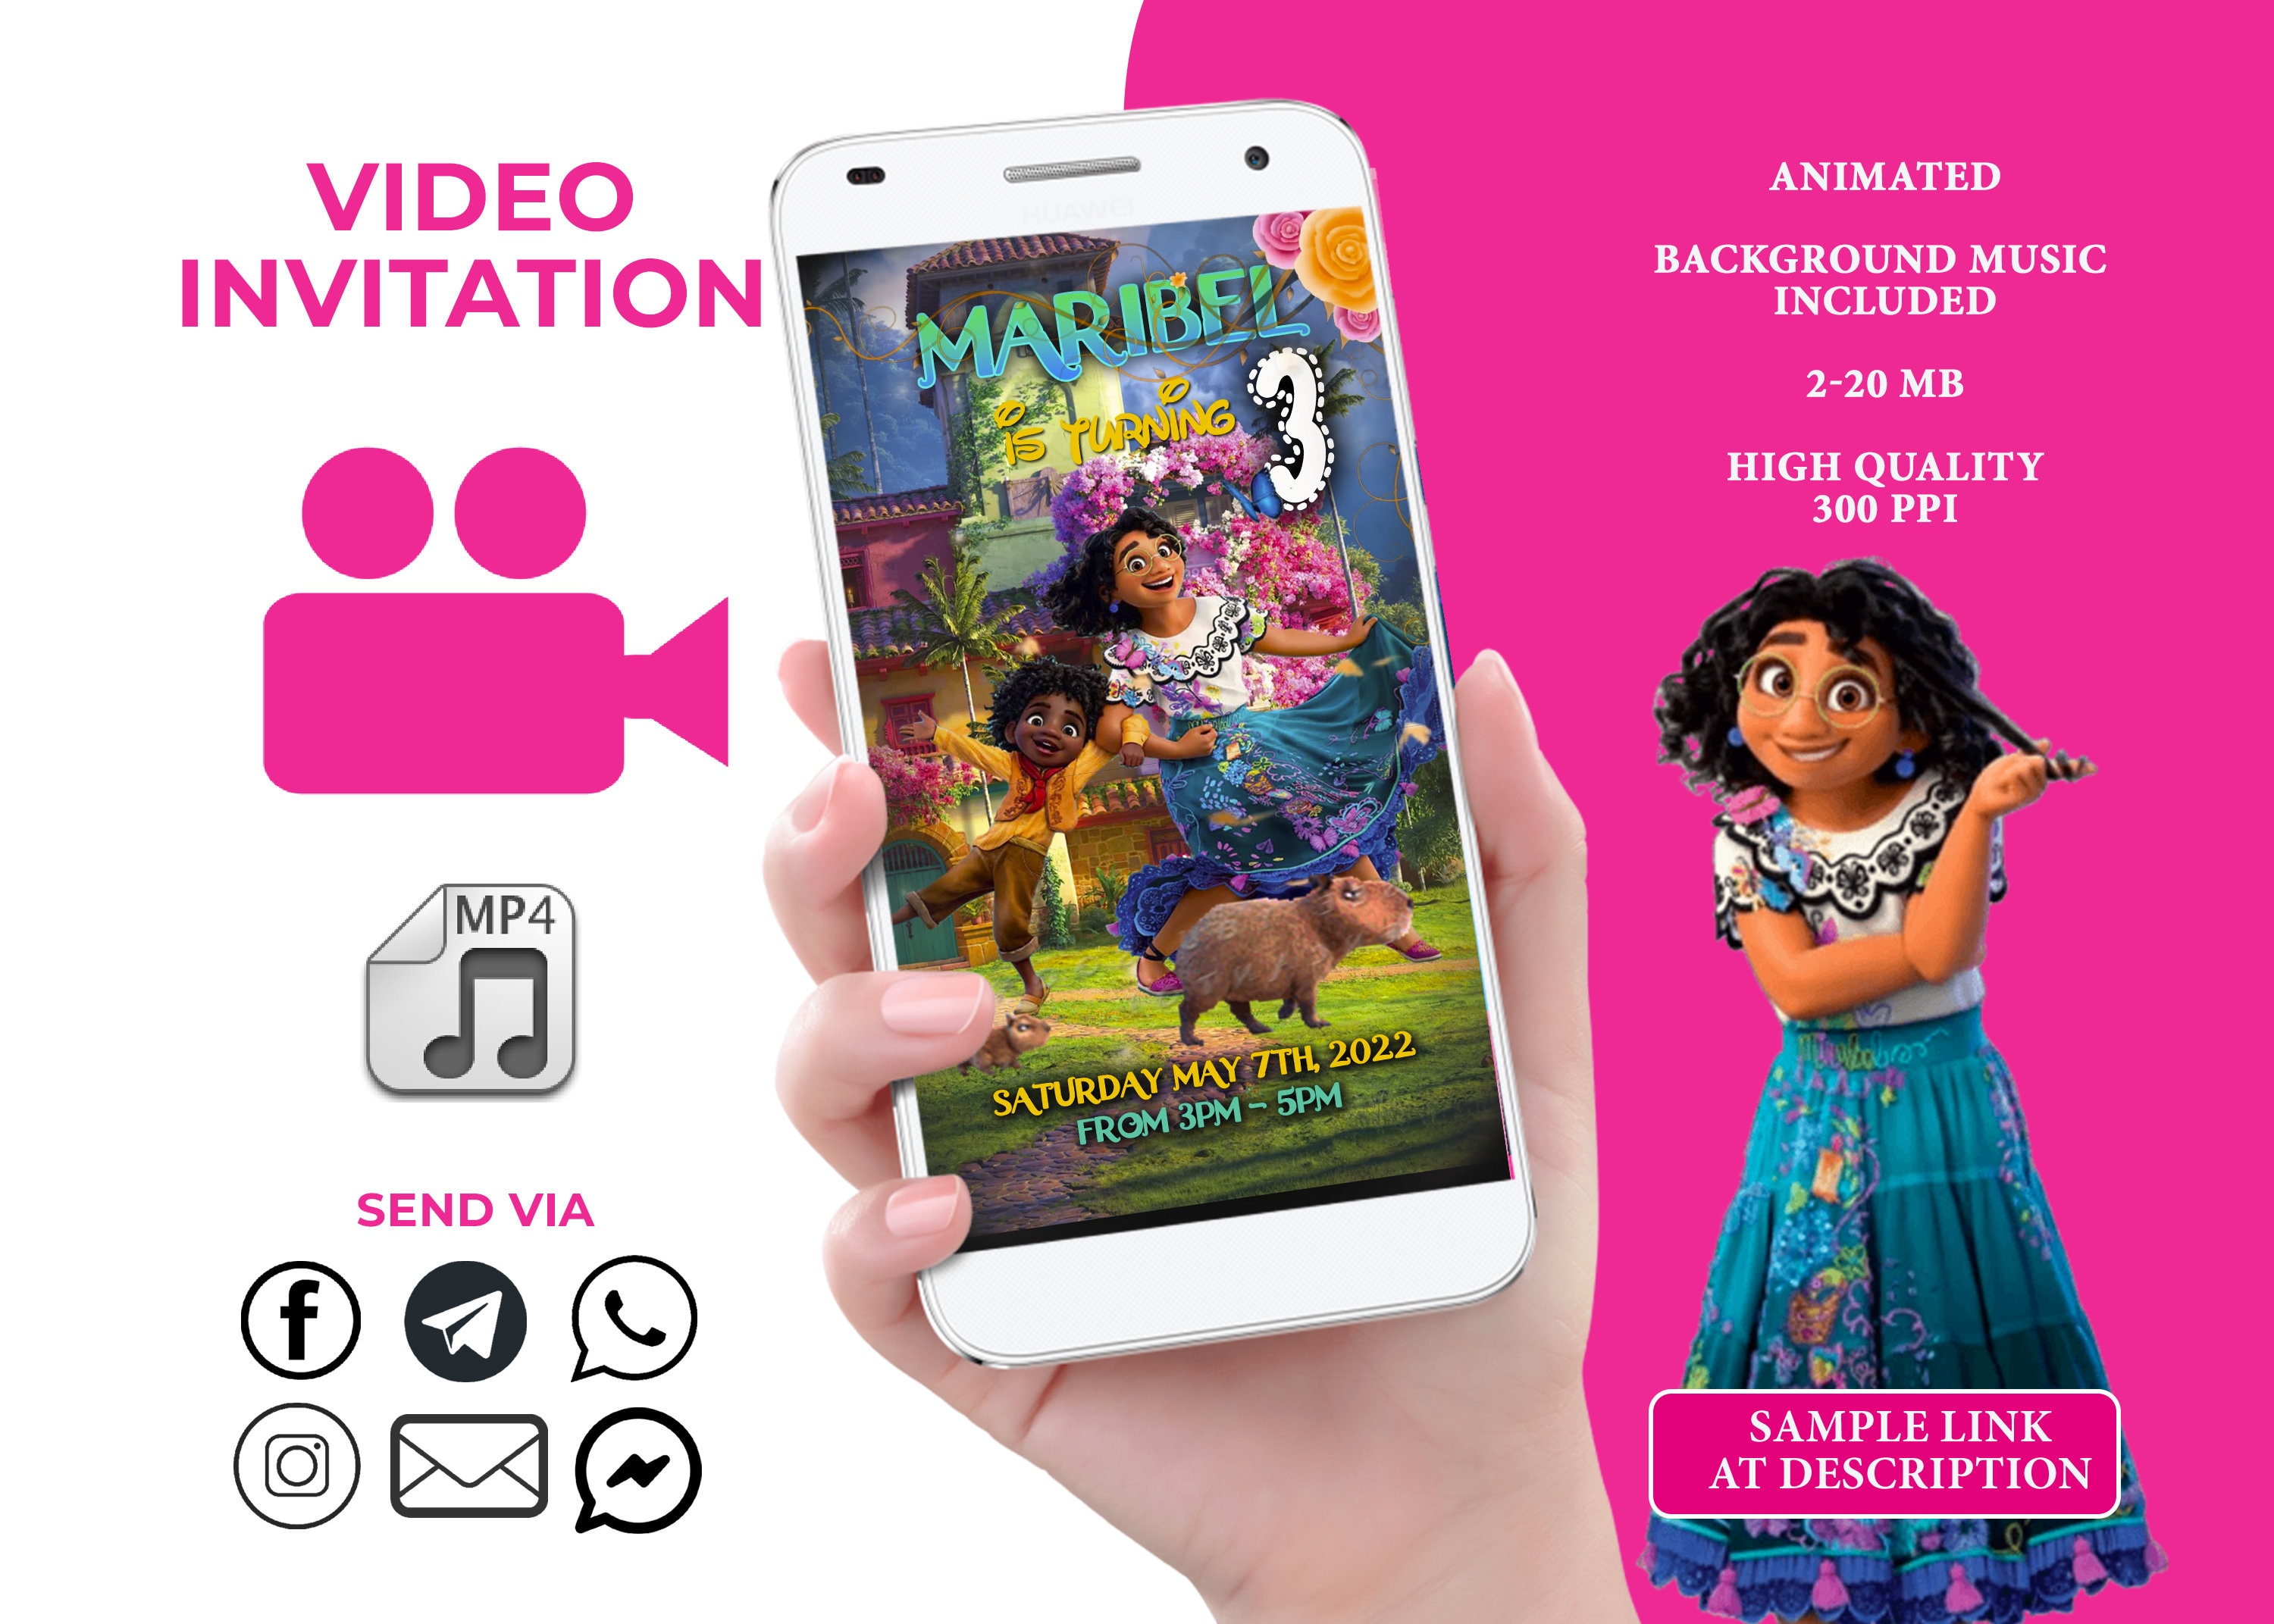 Convite Encanto Mirabel Disney Digital Whatsapp Virtual